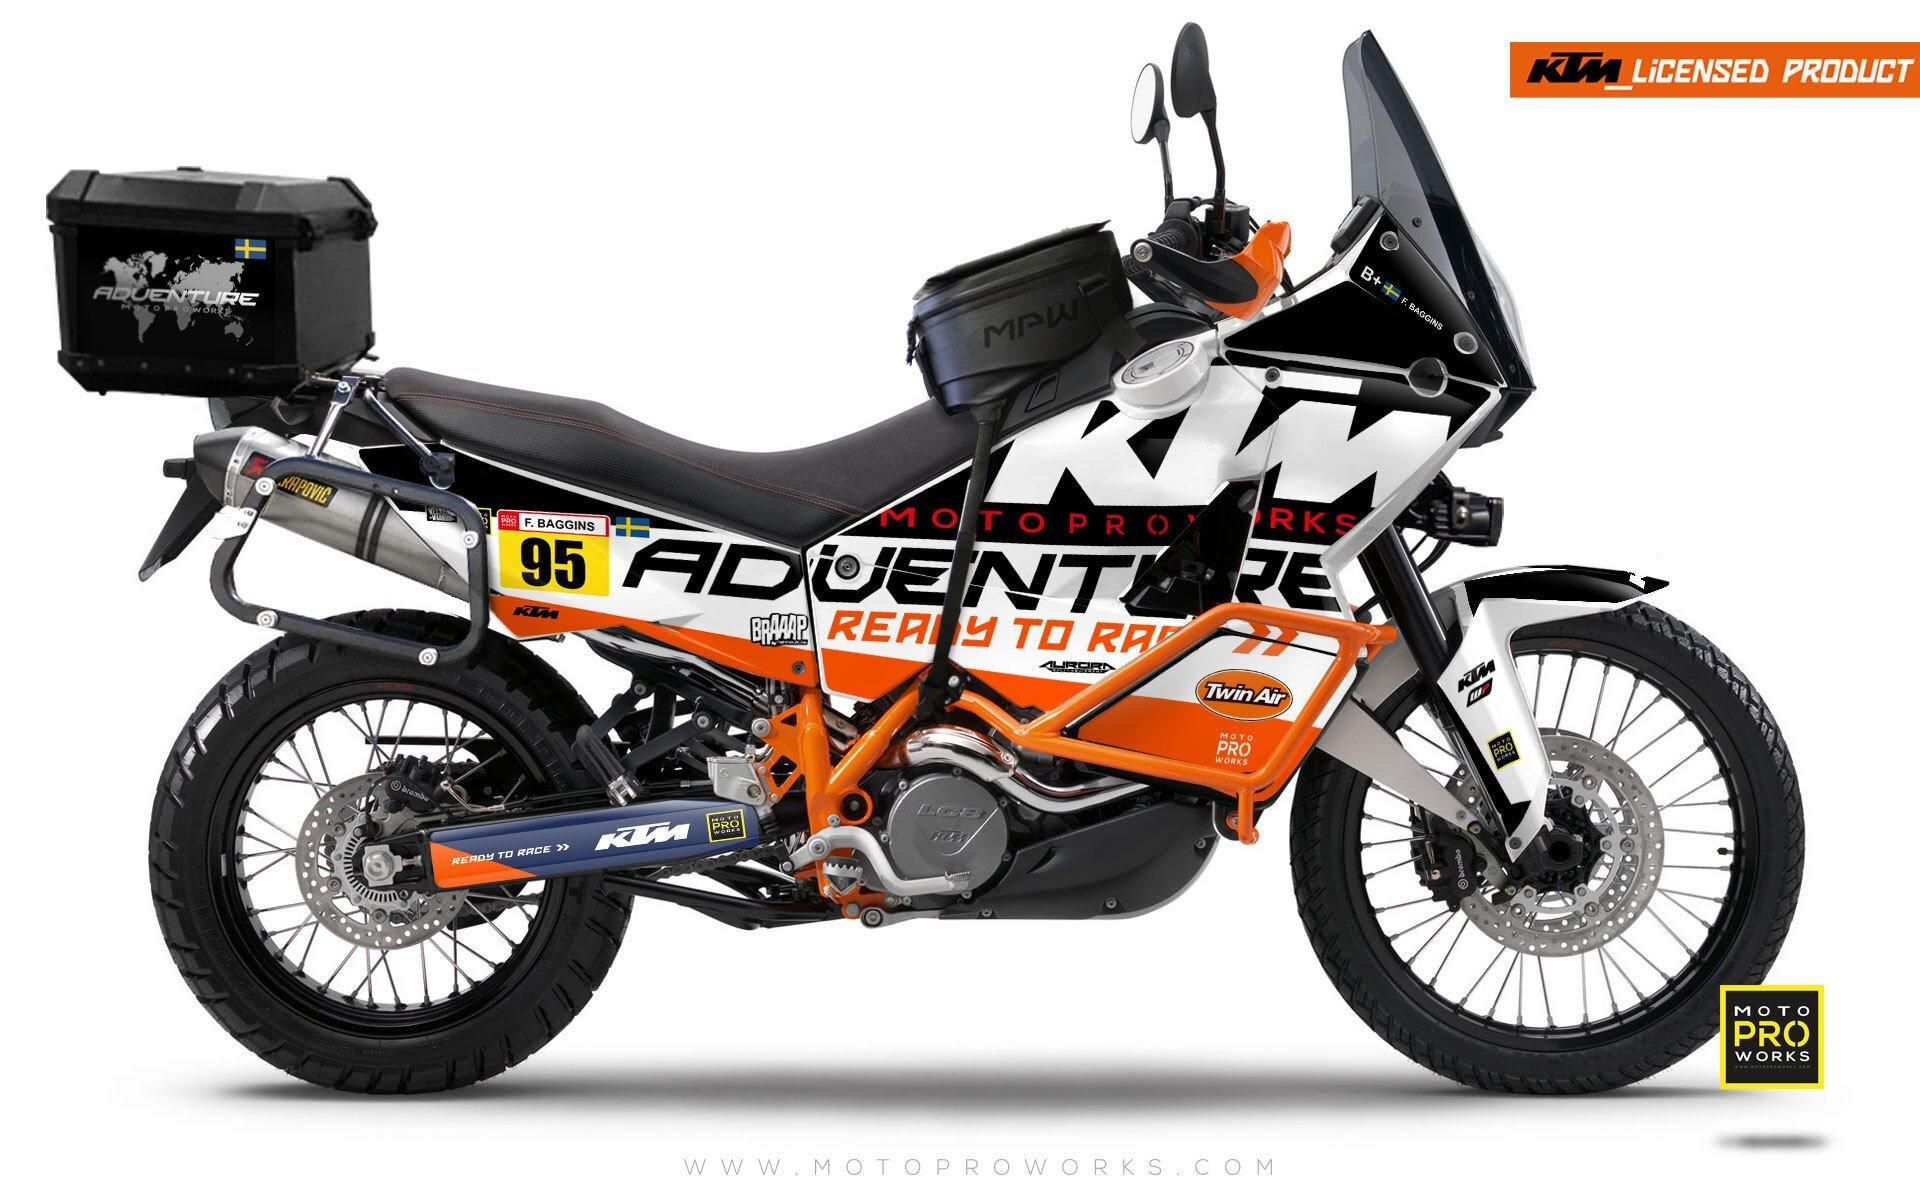 KTM Adventure GRAPHIC KIT - "WAYPOINTER" (night) - MotoProWorks | Decals and Bike Graphic kit